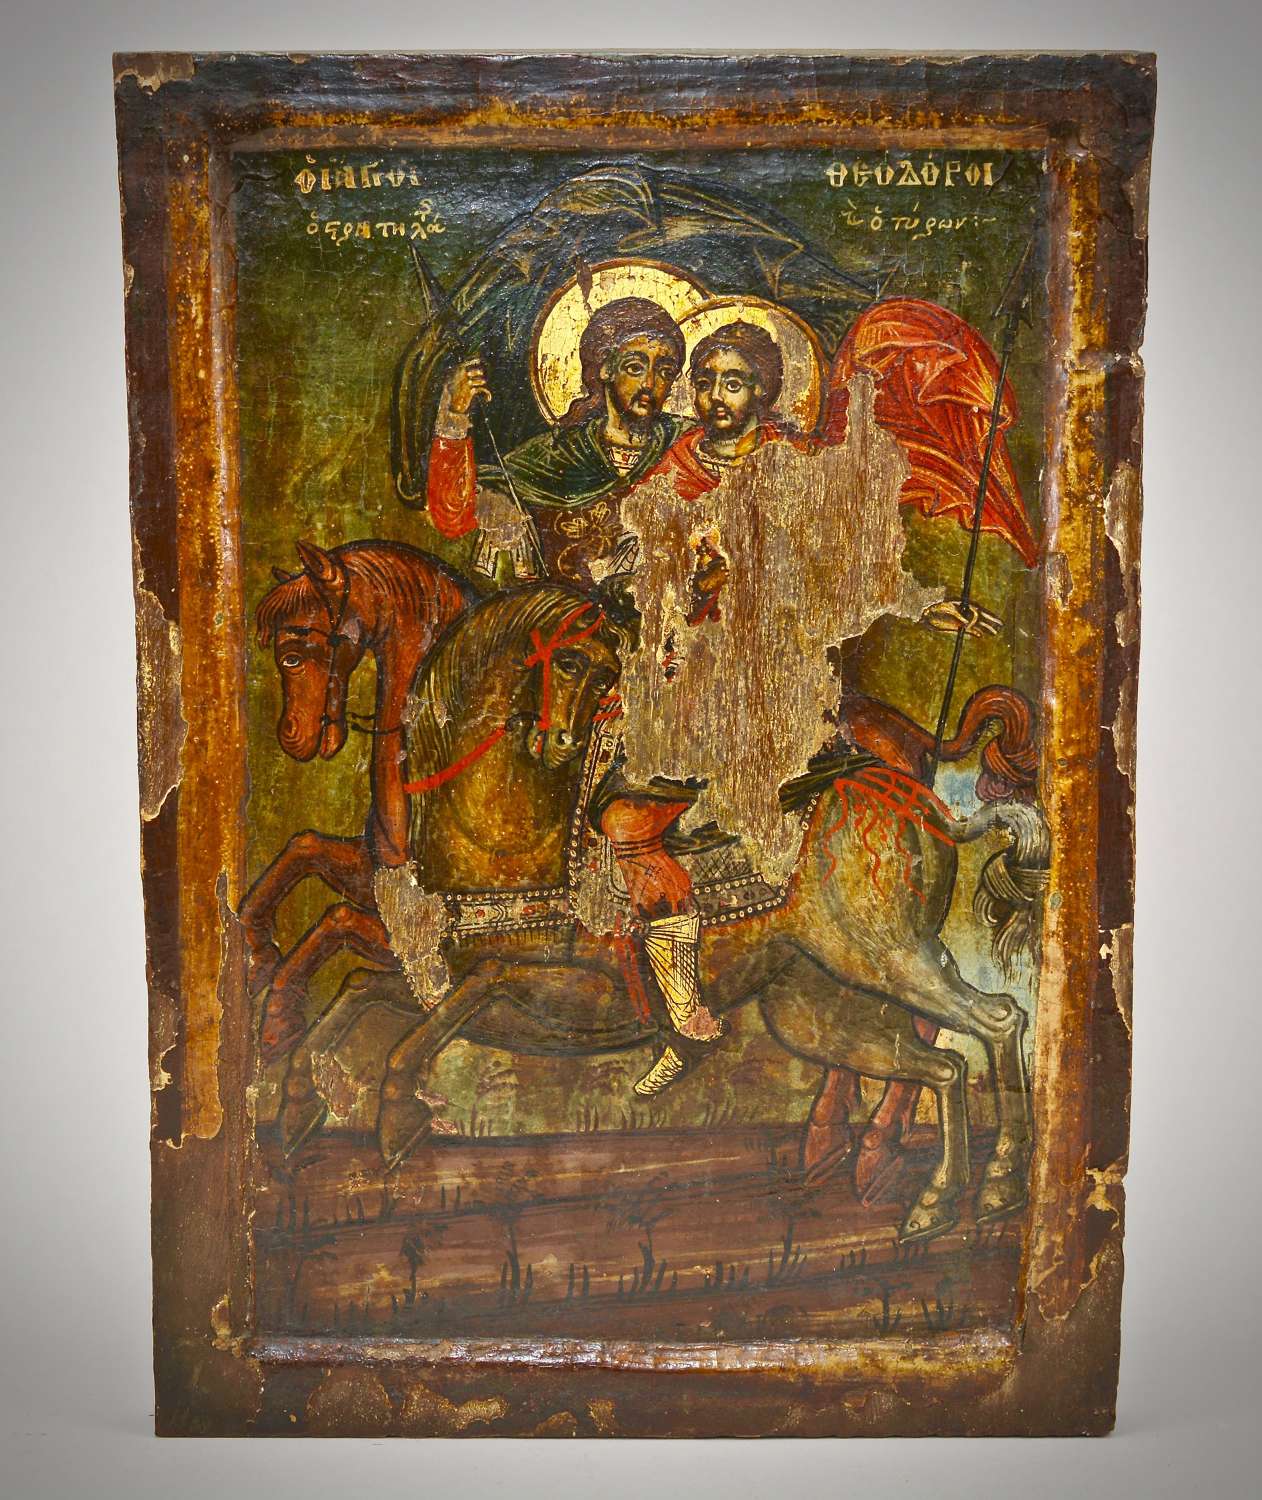 Antique Greek icon depicting Saints on horseback